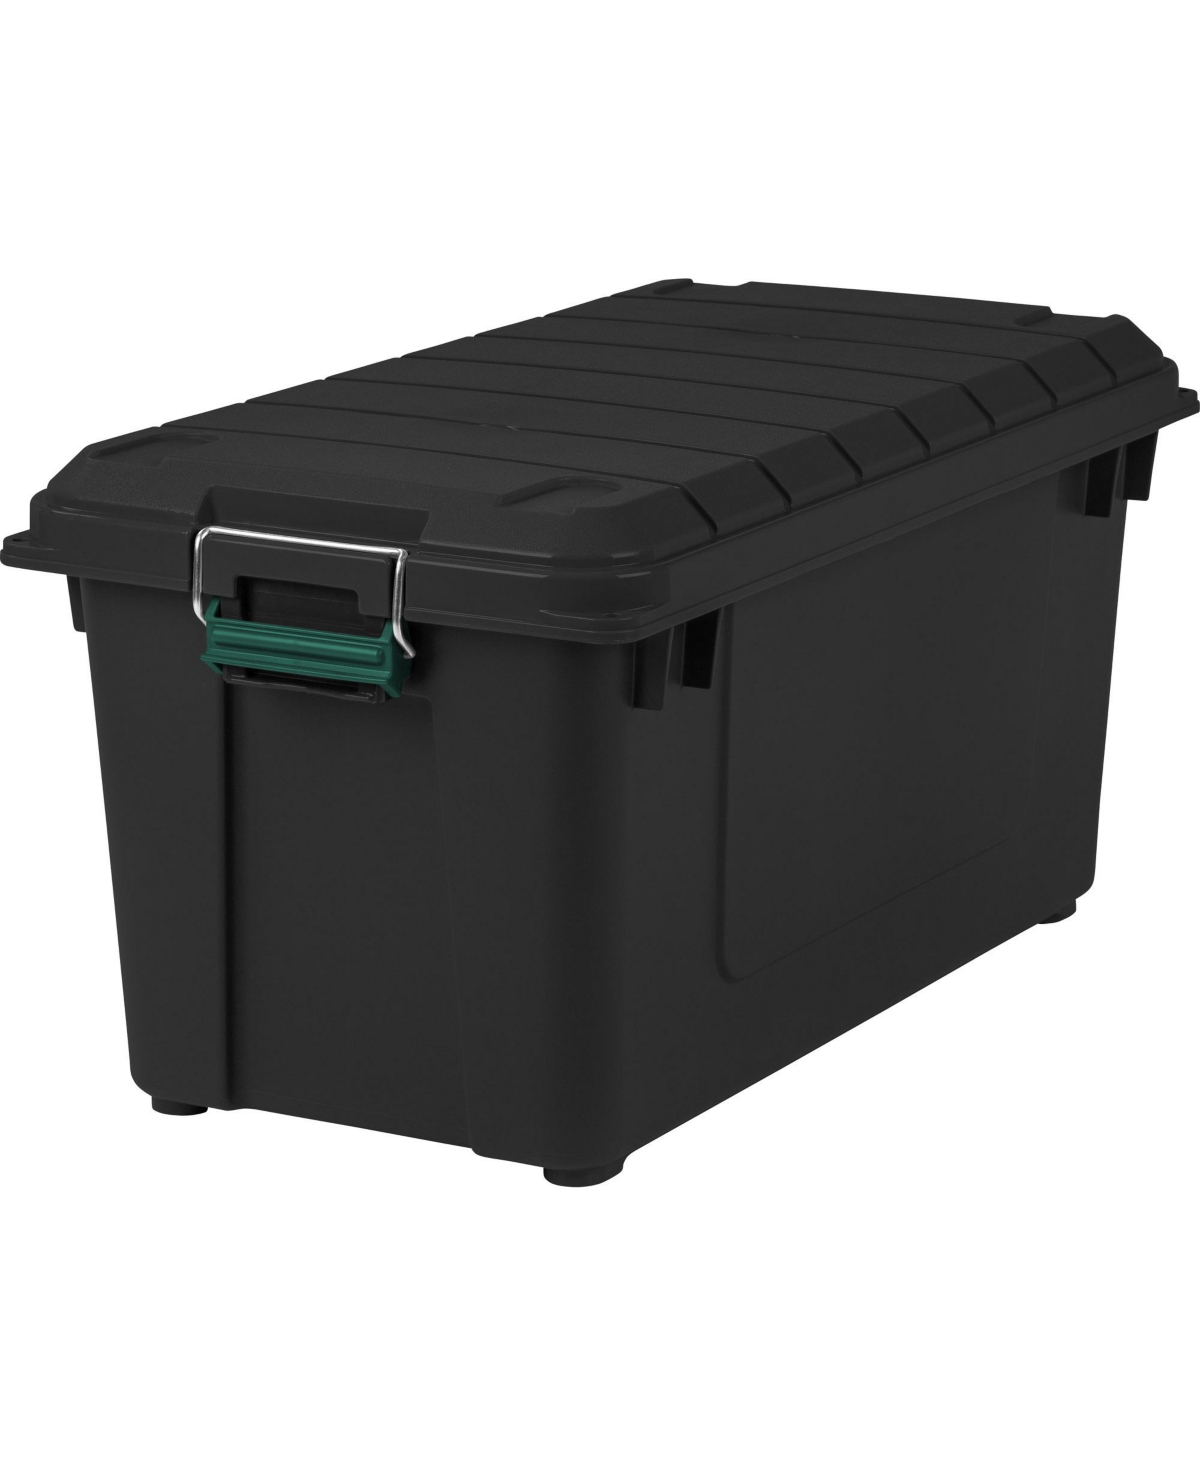 82 Quart WeatherPro Storage Box, Store-It-All Utility Tote, Black - Black